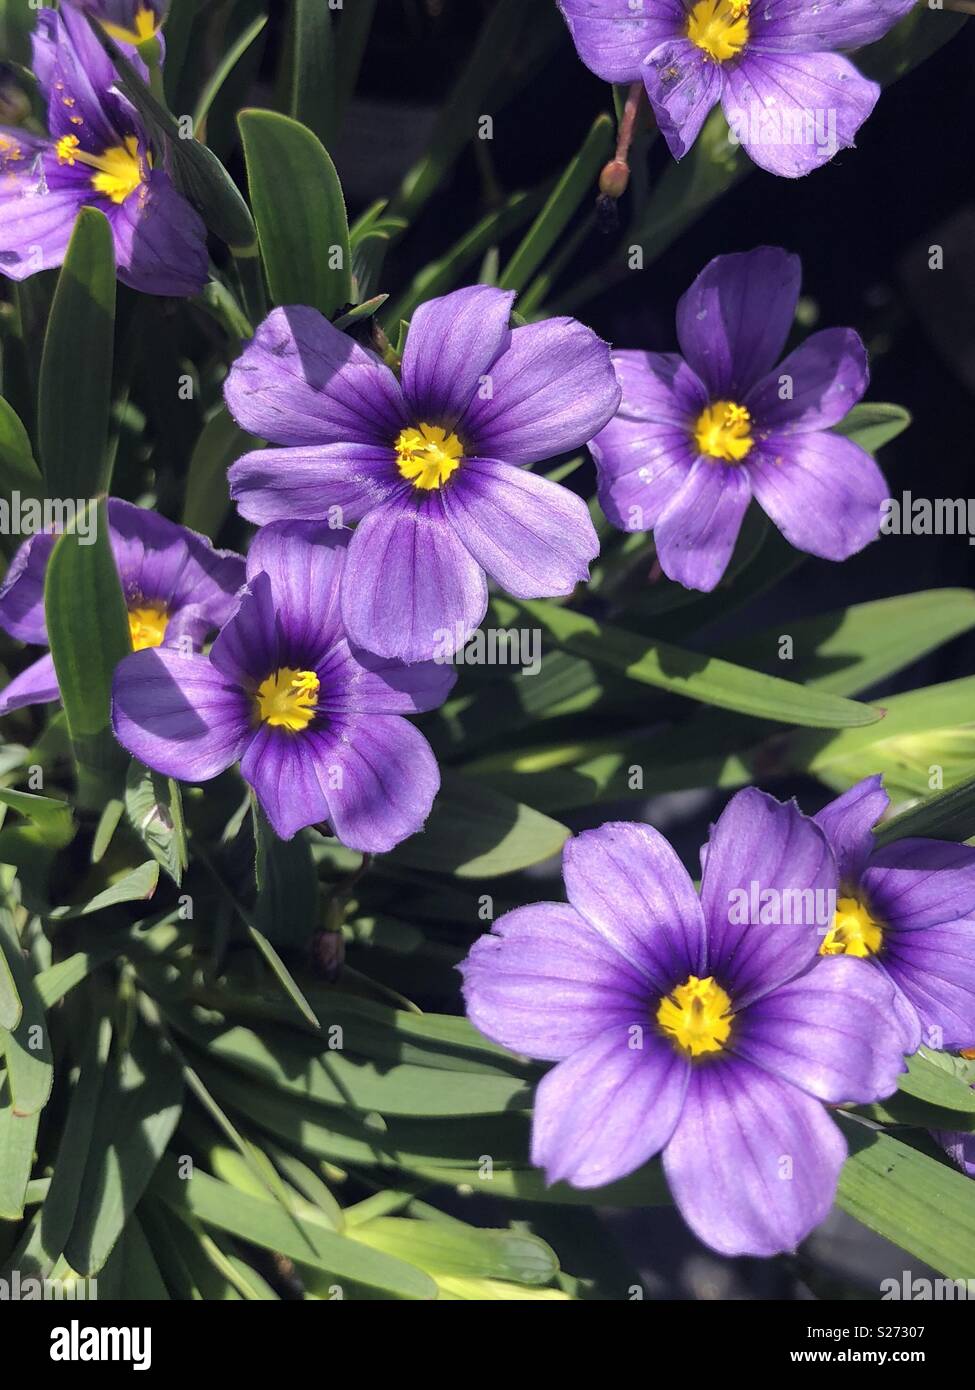 Sisyrinchium rocky point purple flowers Stock Photo